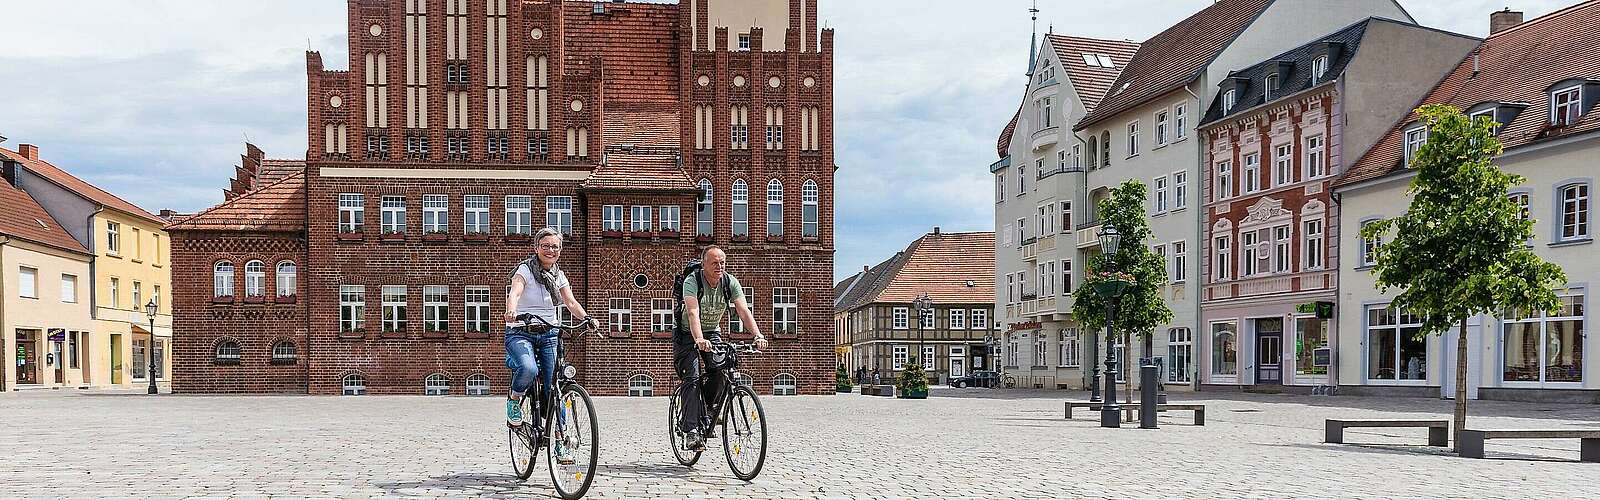 Radfahrer auf dem Marktplatz in Wittstock/Dosse,
        
    

        Foto: Tourismusverband Prignitz e.V./Markus Tiemann